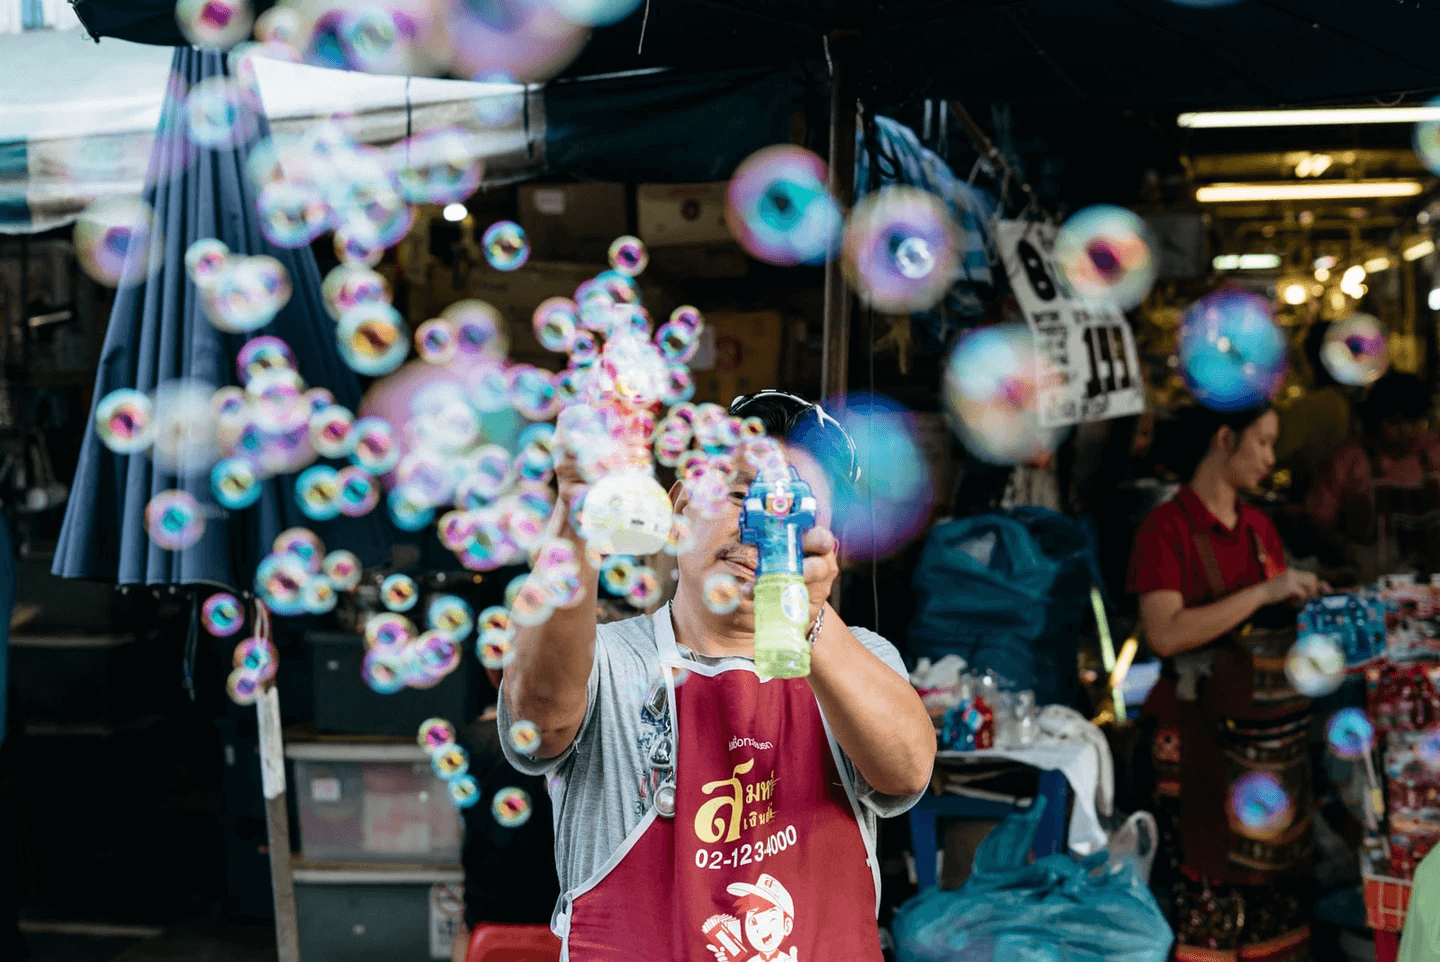 man spraying bubbles